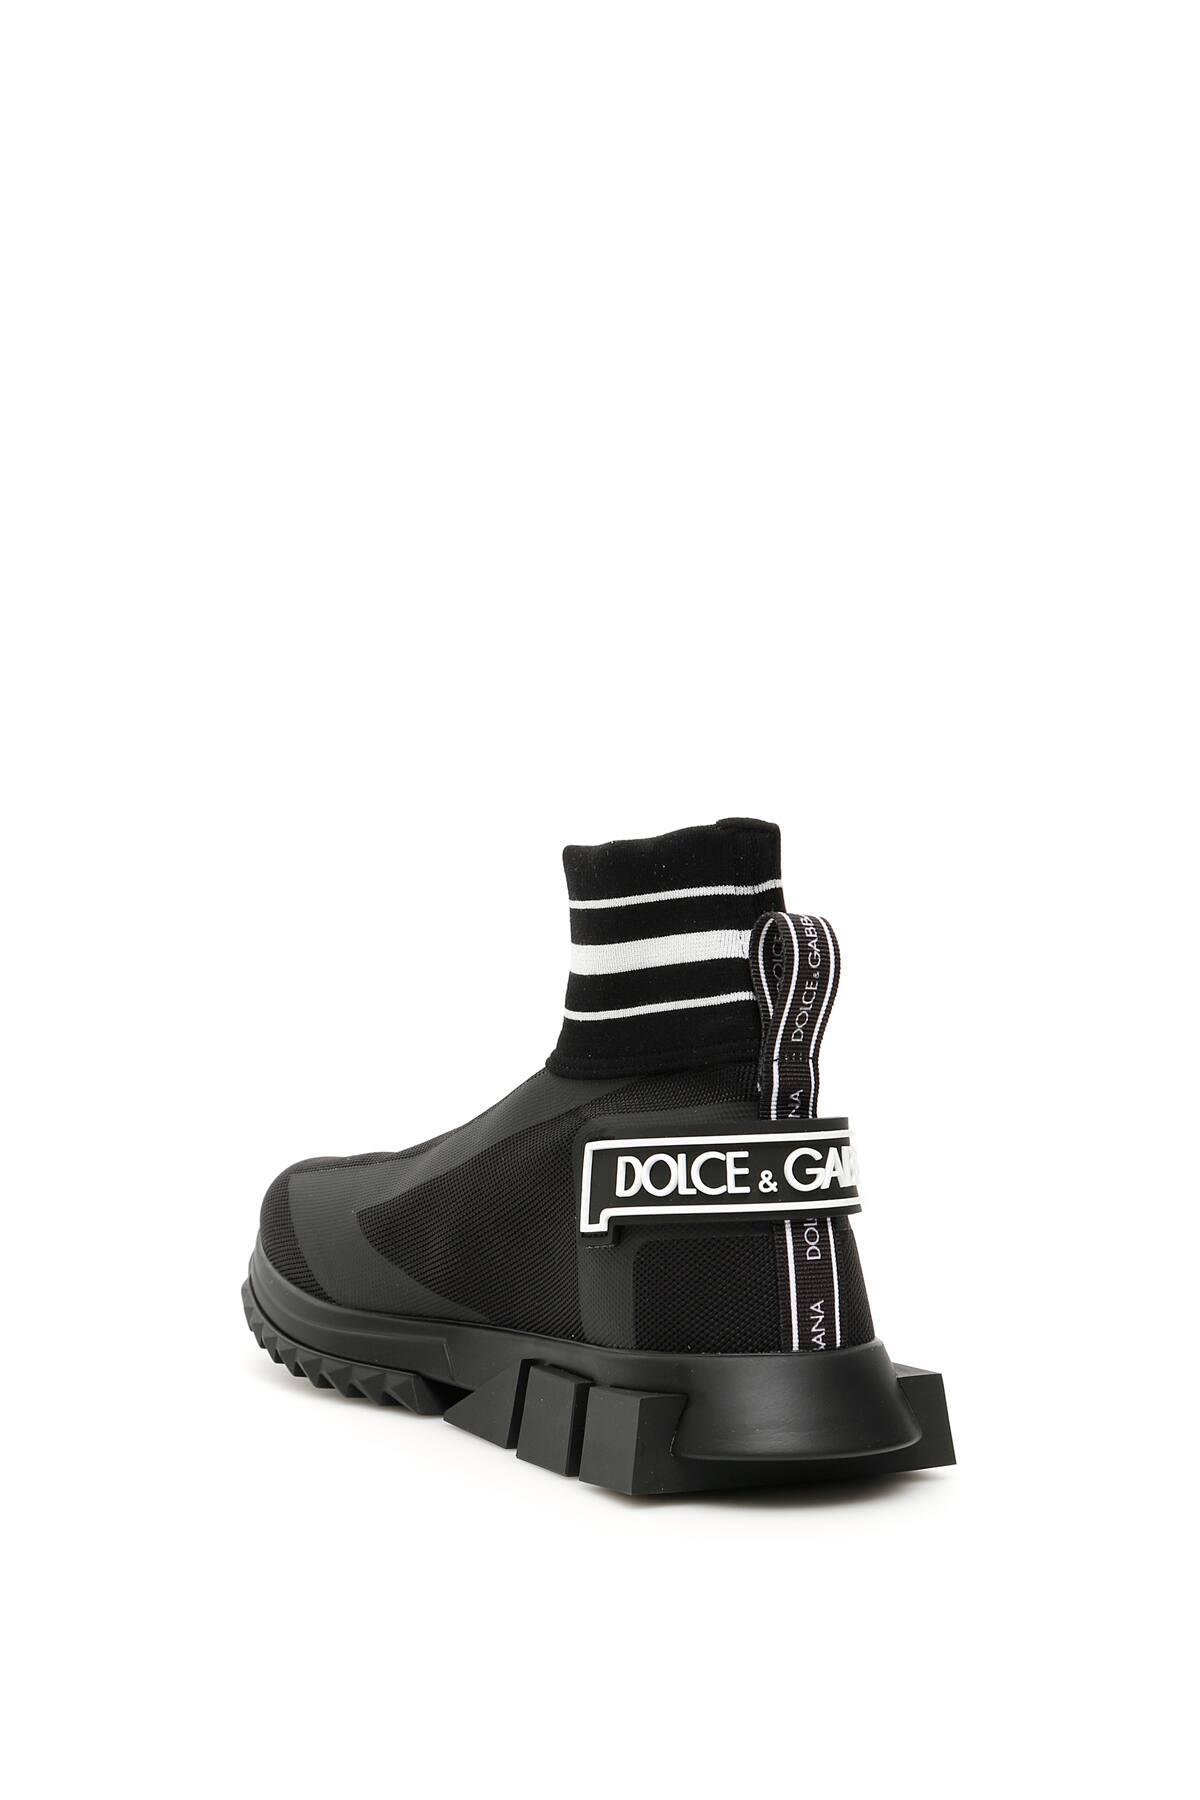 Dolce & Gabbana Rubber Sorrento Running Sneakers in Black,White (Black ...